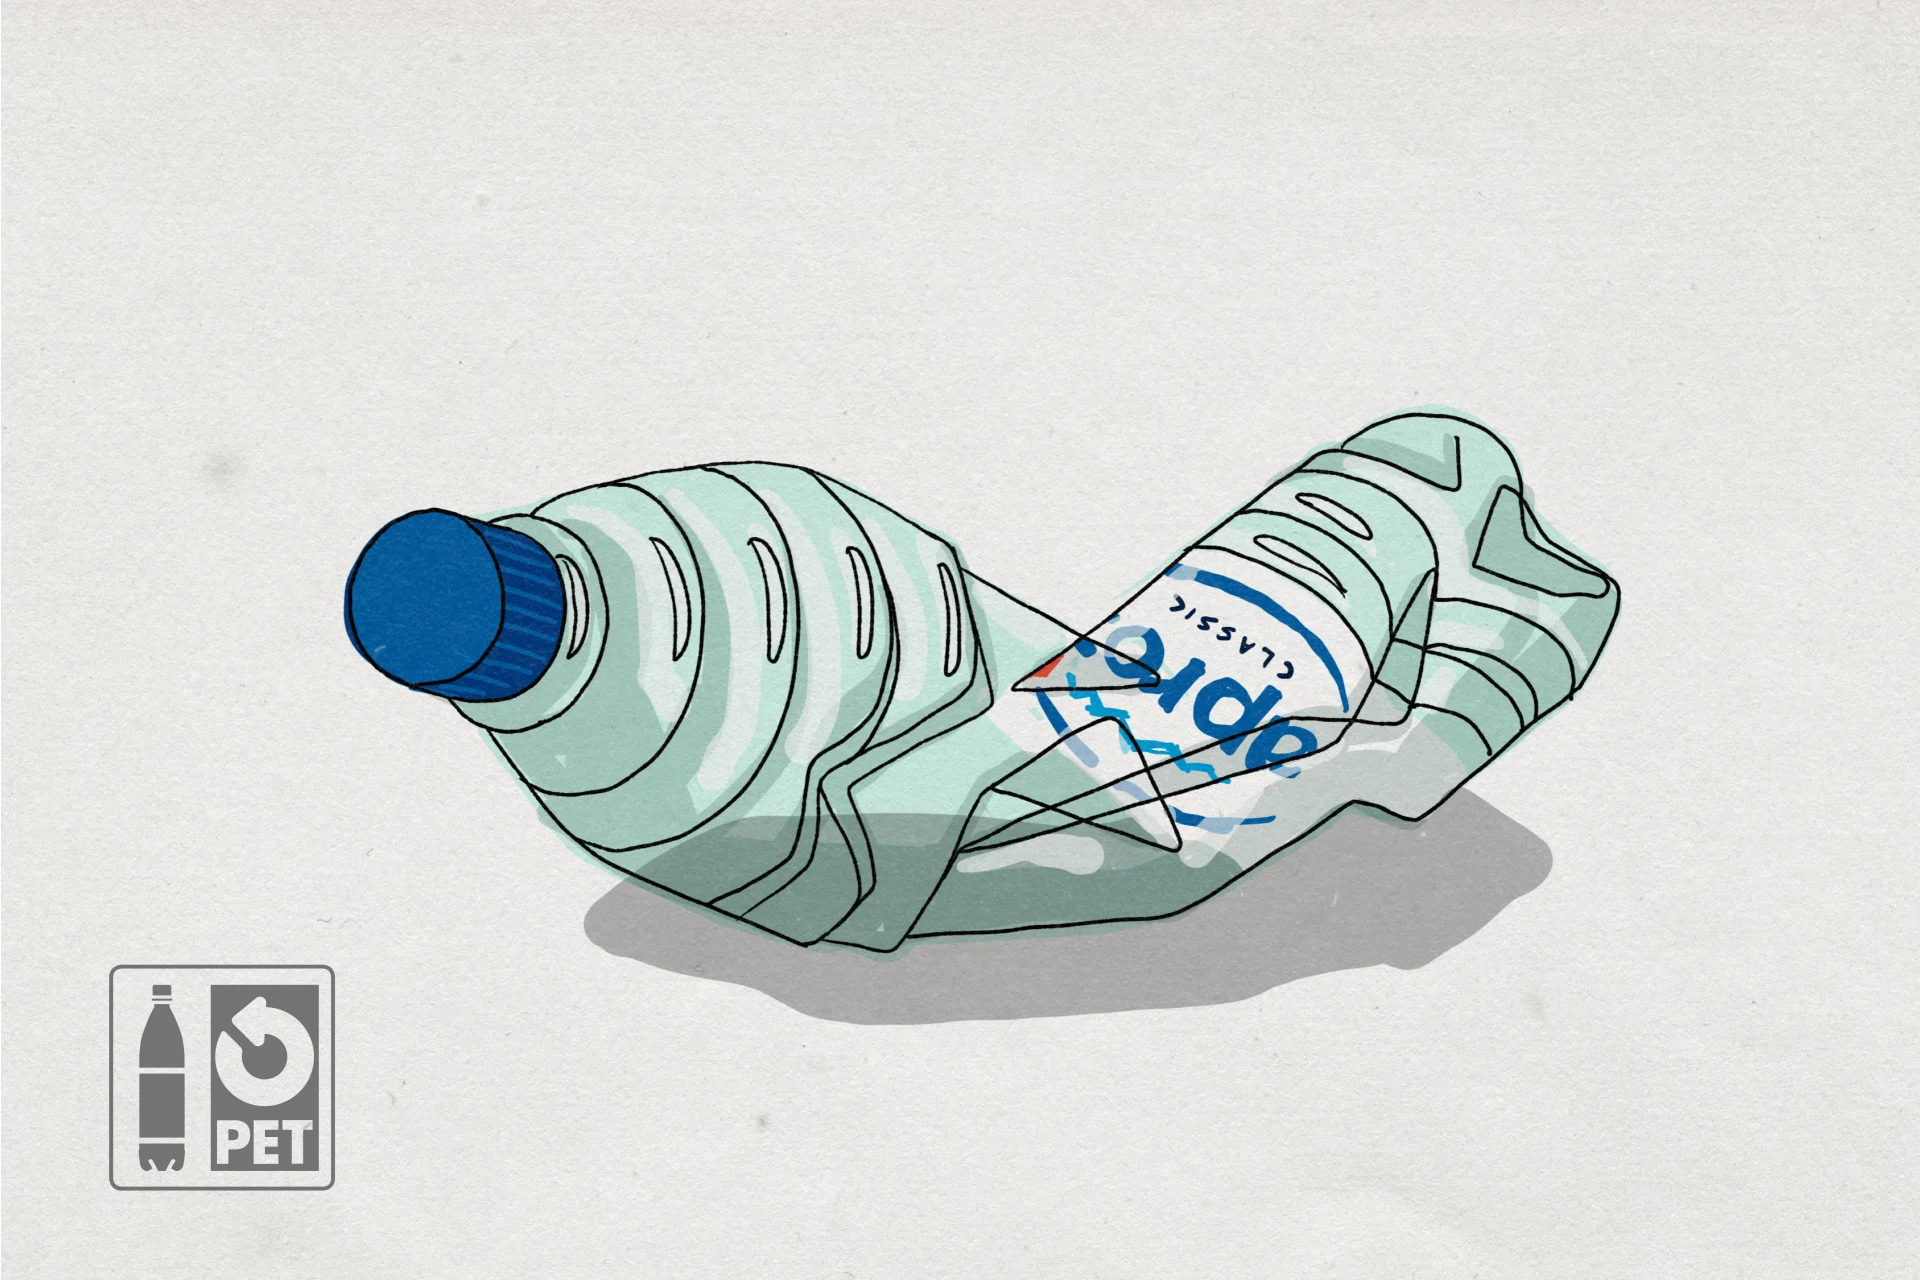 Immagine di una bottiglia di plastica per bevande vuota e schiacciata